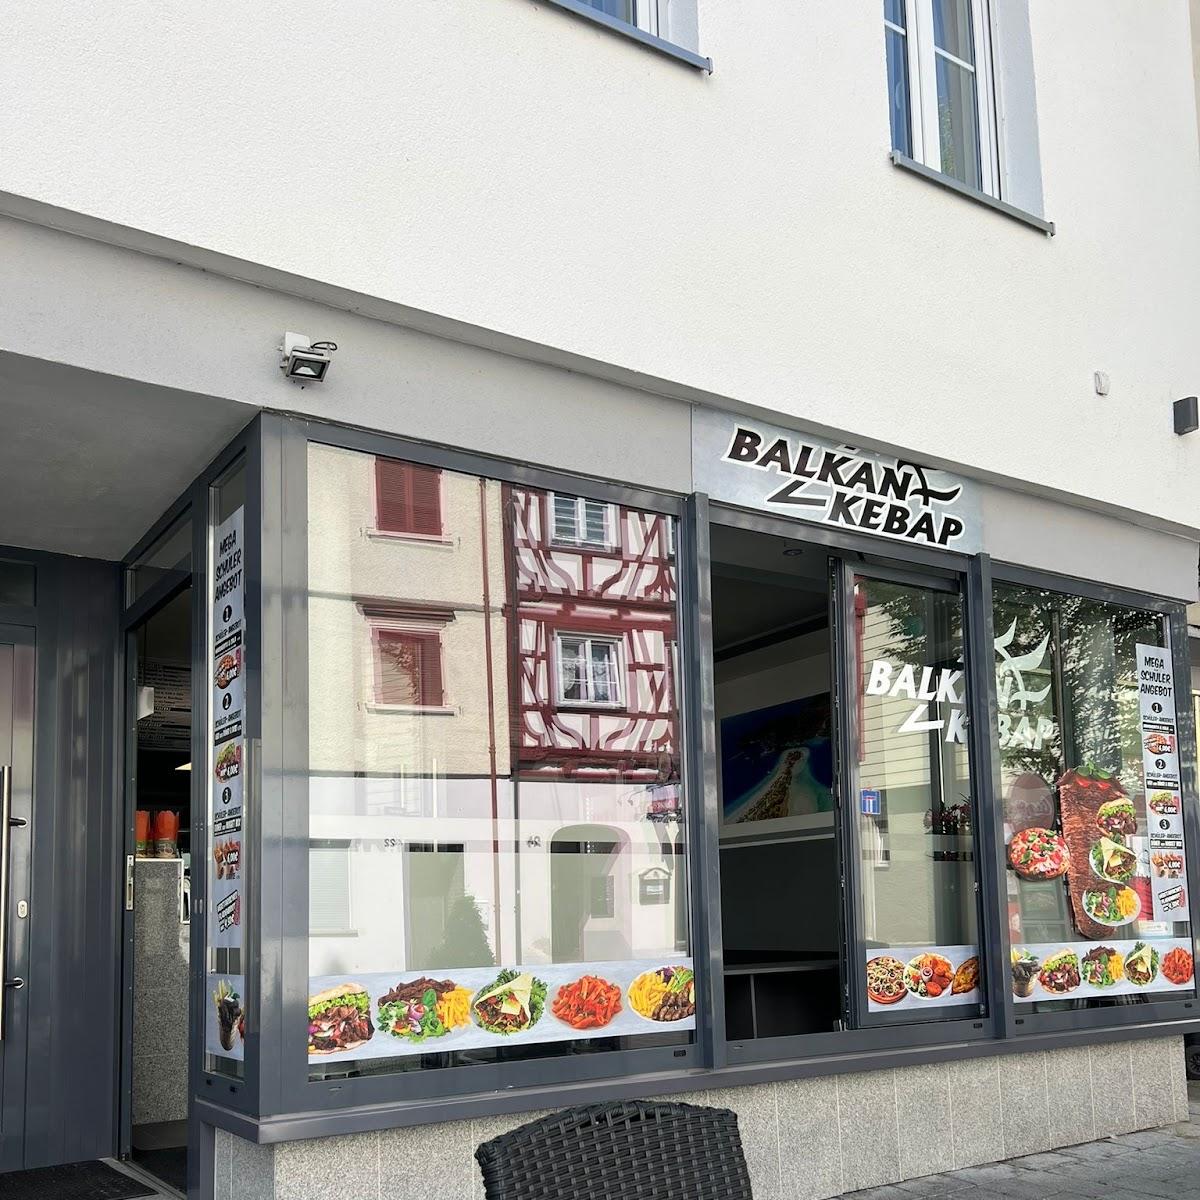 Restaurant "Balkan Kebap" in Munderkingen